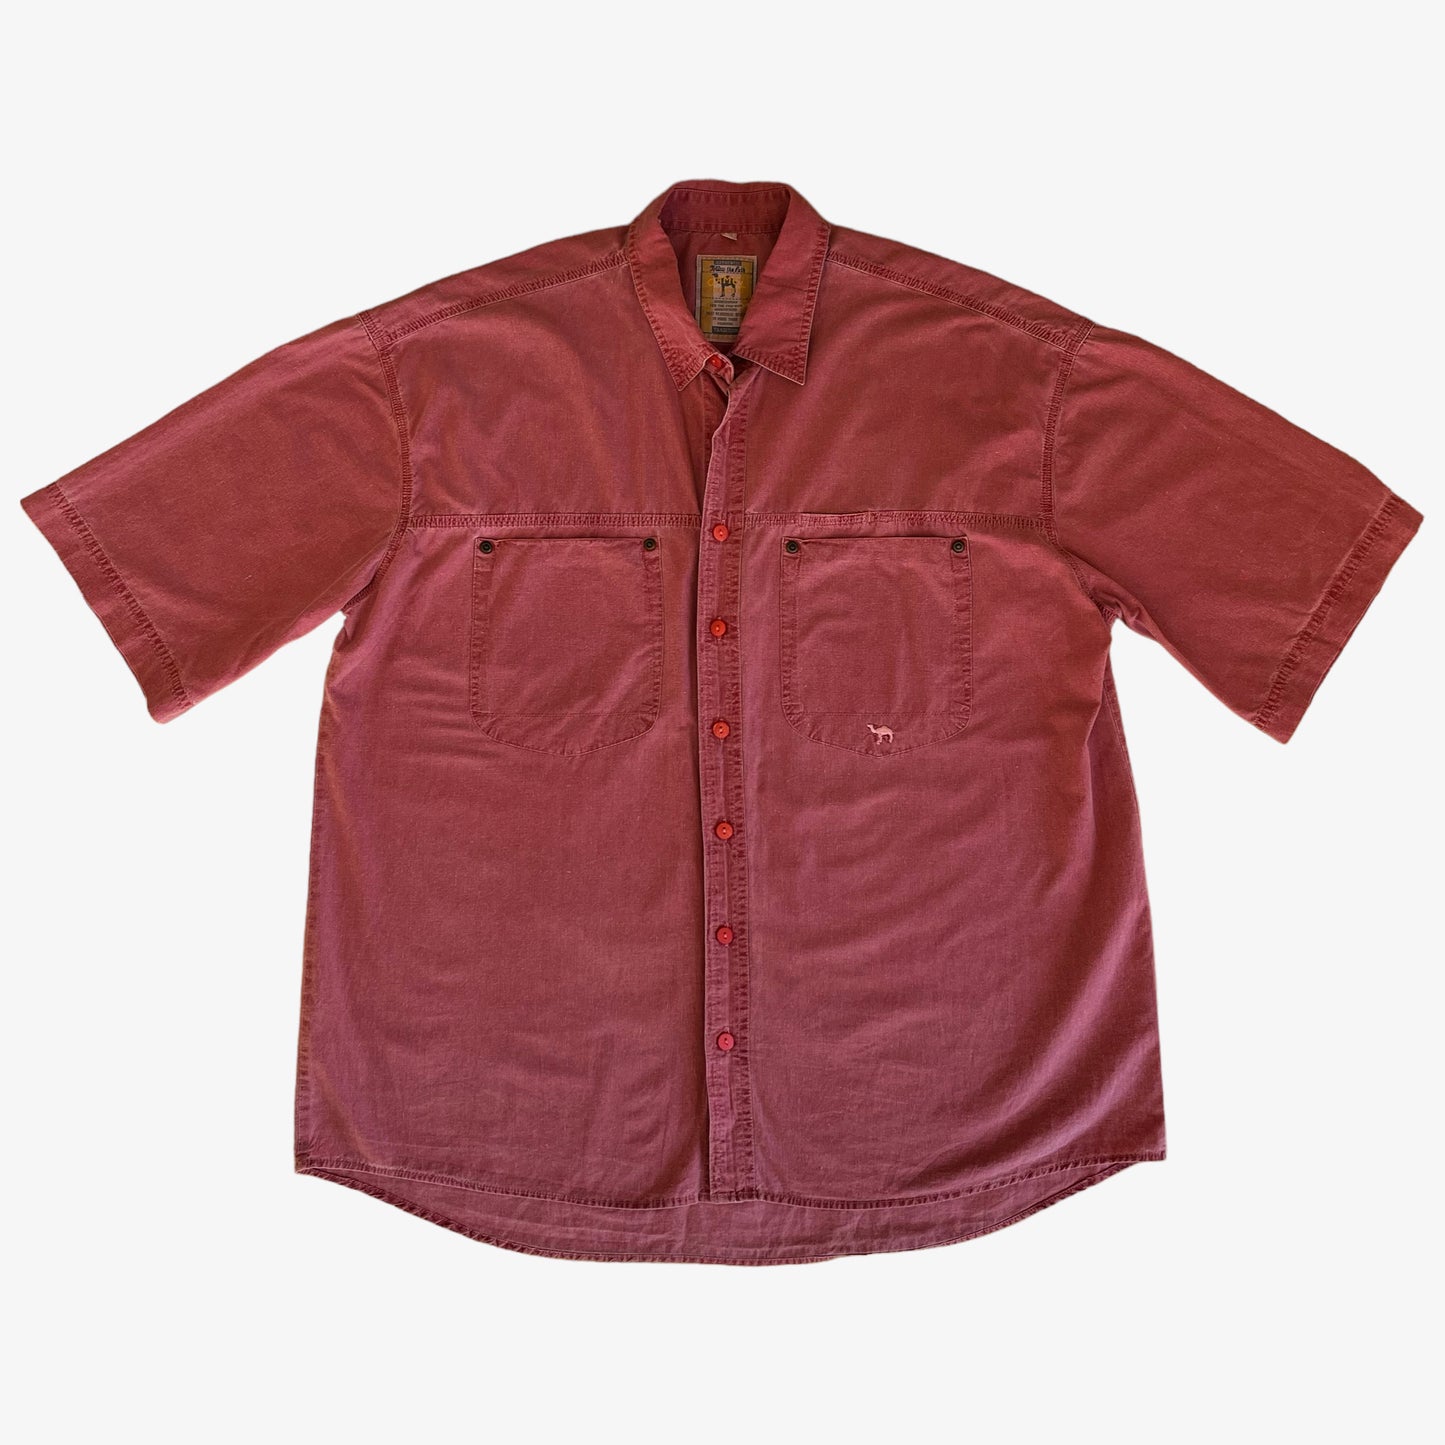 Vintage 90s Camel Cigarettes Pale Red Short Sleeve Shirt - Casspios Dream